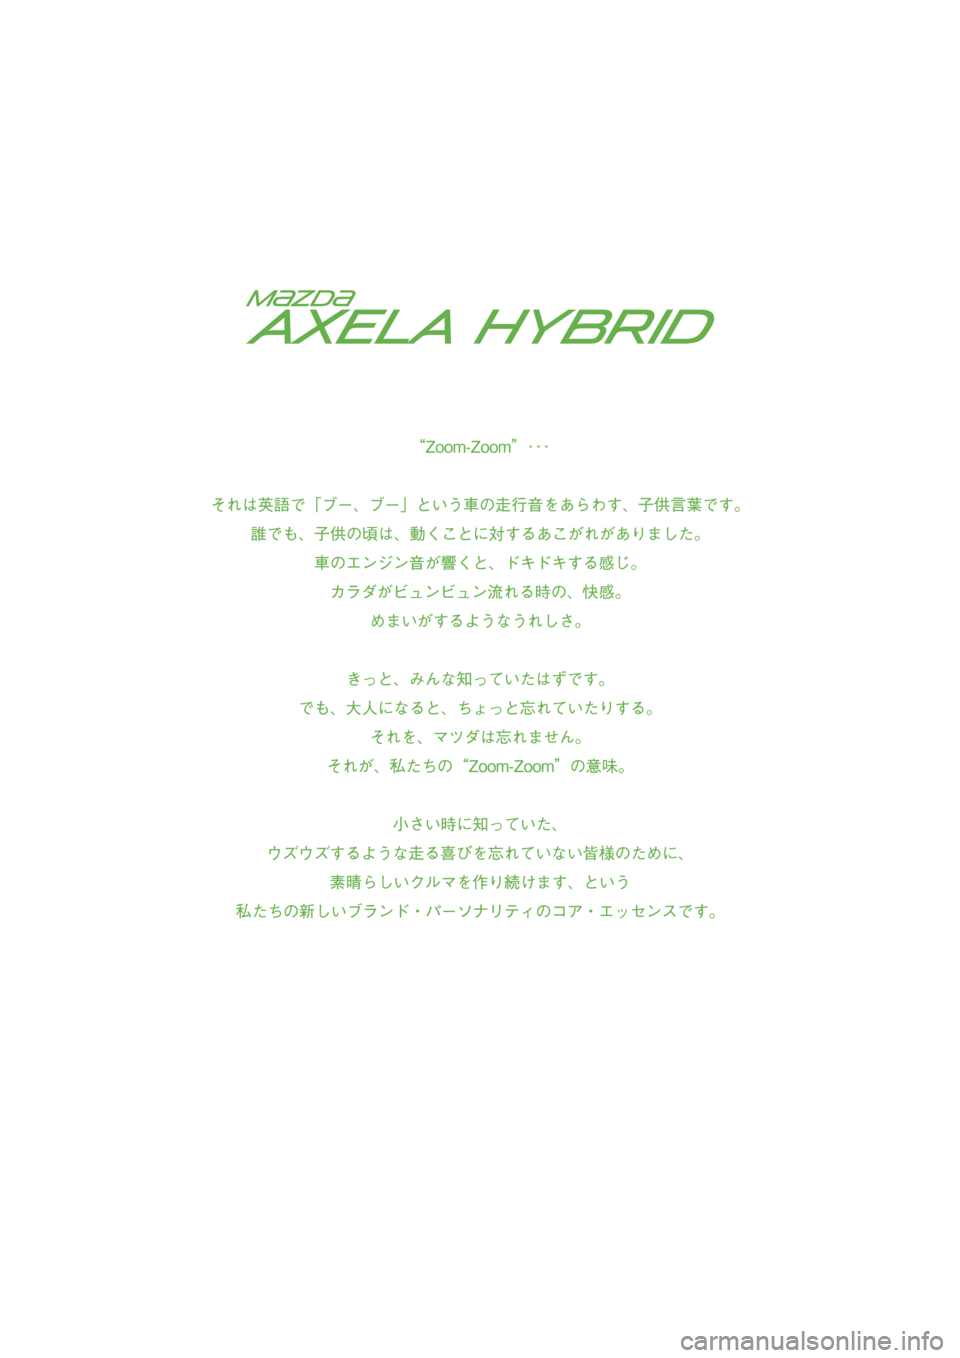 MAZDA MODEL AXELA HYBRID 2015  アクセラハイブリッド｜取扱説明書 (in Japanese)  �#�:��.�#�*�;�$�4�+�&�A�$2�A��F�K�V�K�Q�P��A�3�W�K�E�M�)�W�K�F�G��K�P�F�D�����#�:��.�#�*�;�$�4�+�&�A�$2�A��F�K�V�K�Q�P��A�3�W�K�E�M�)�W�K�F�G��K�P�F�D������������������